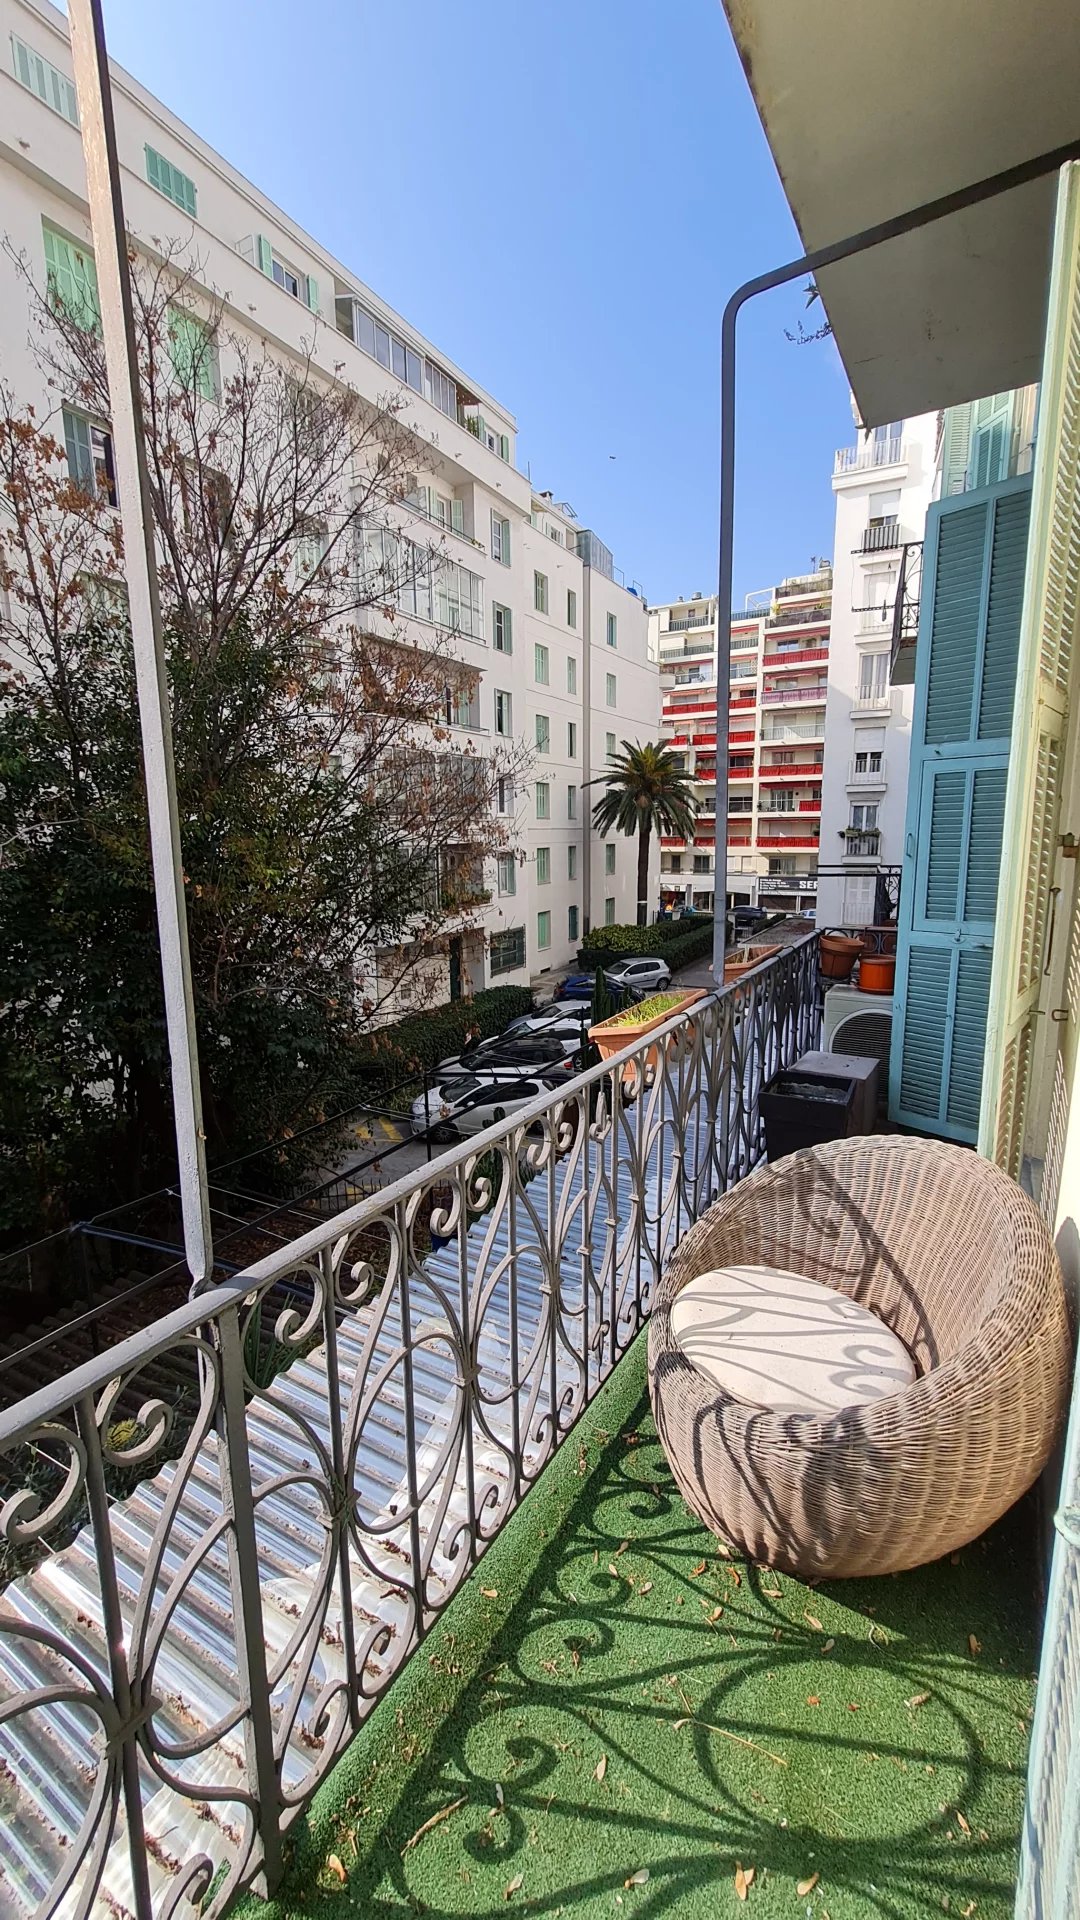 Sale Apartment - Nice Rue de France